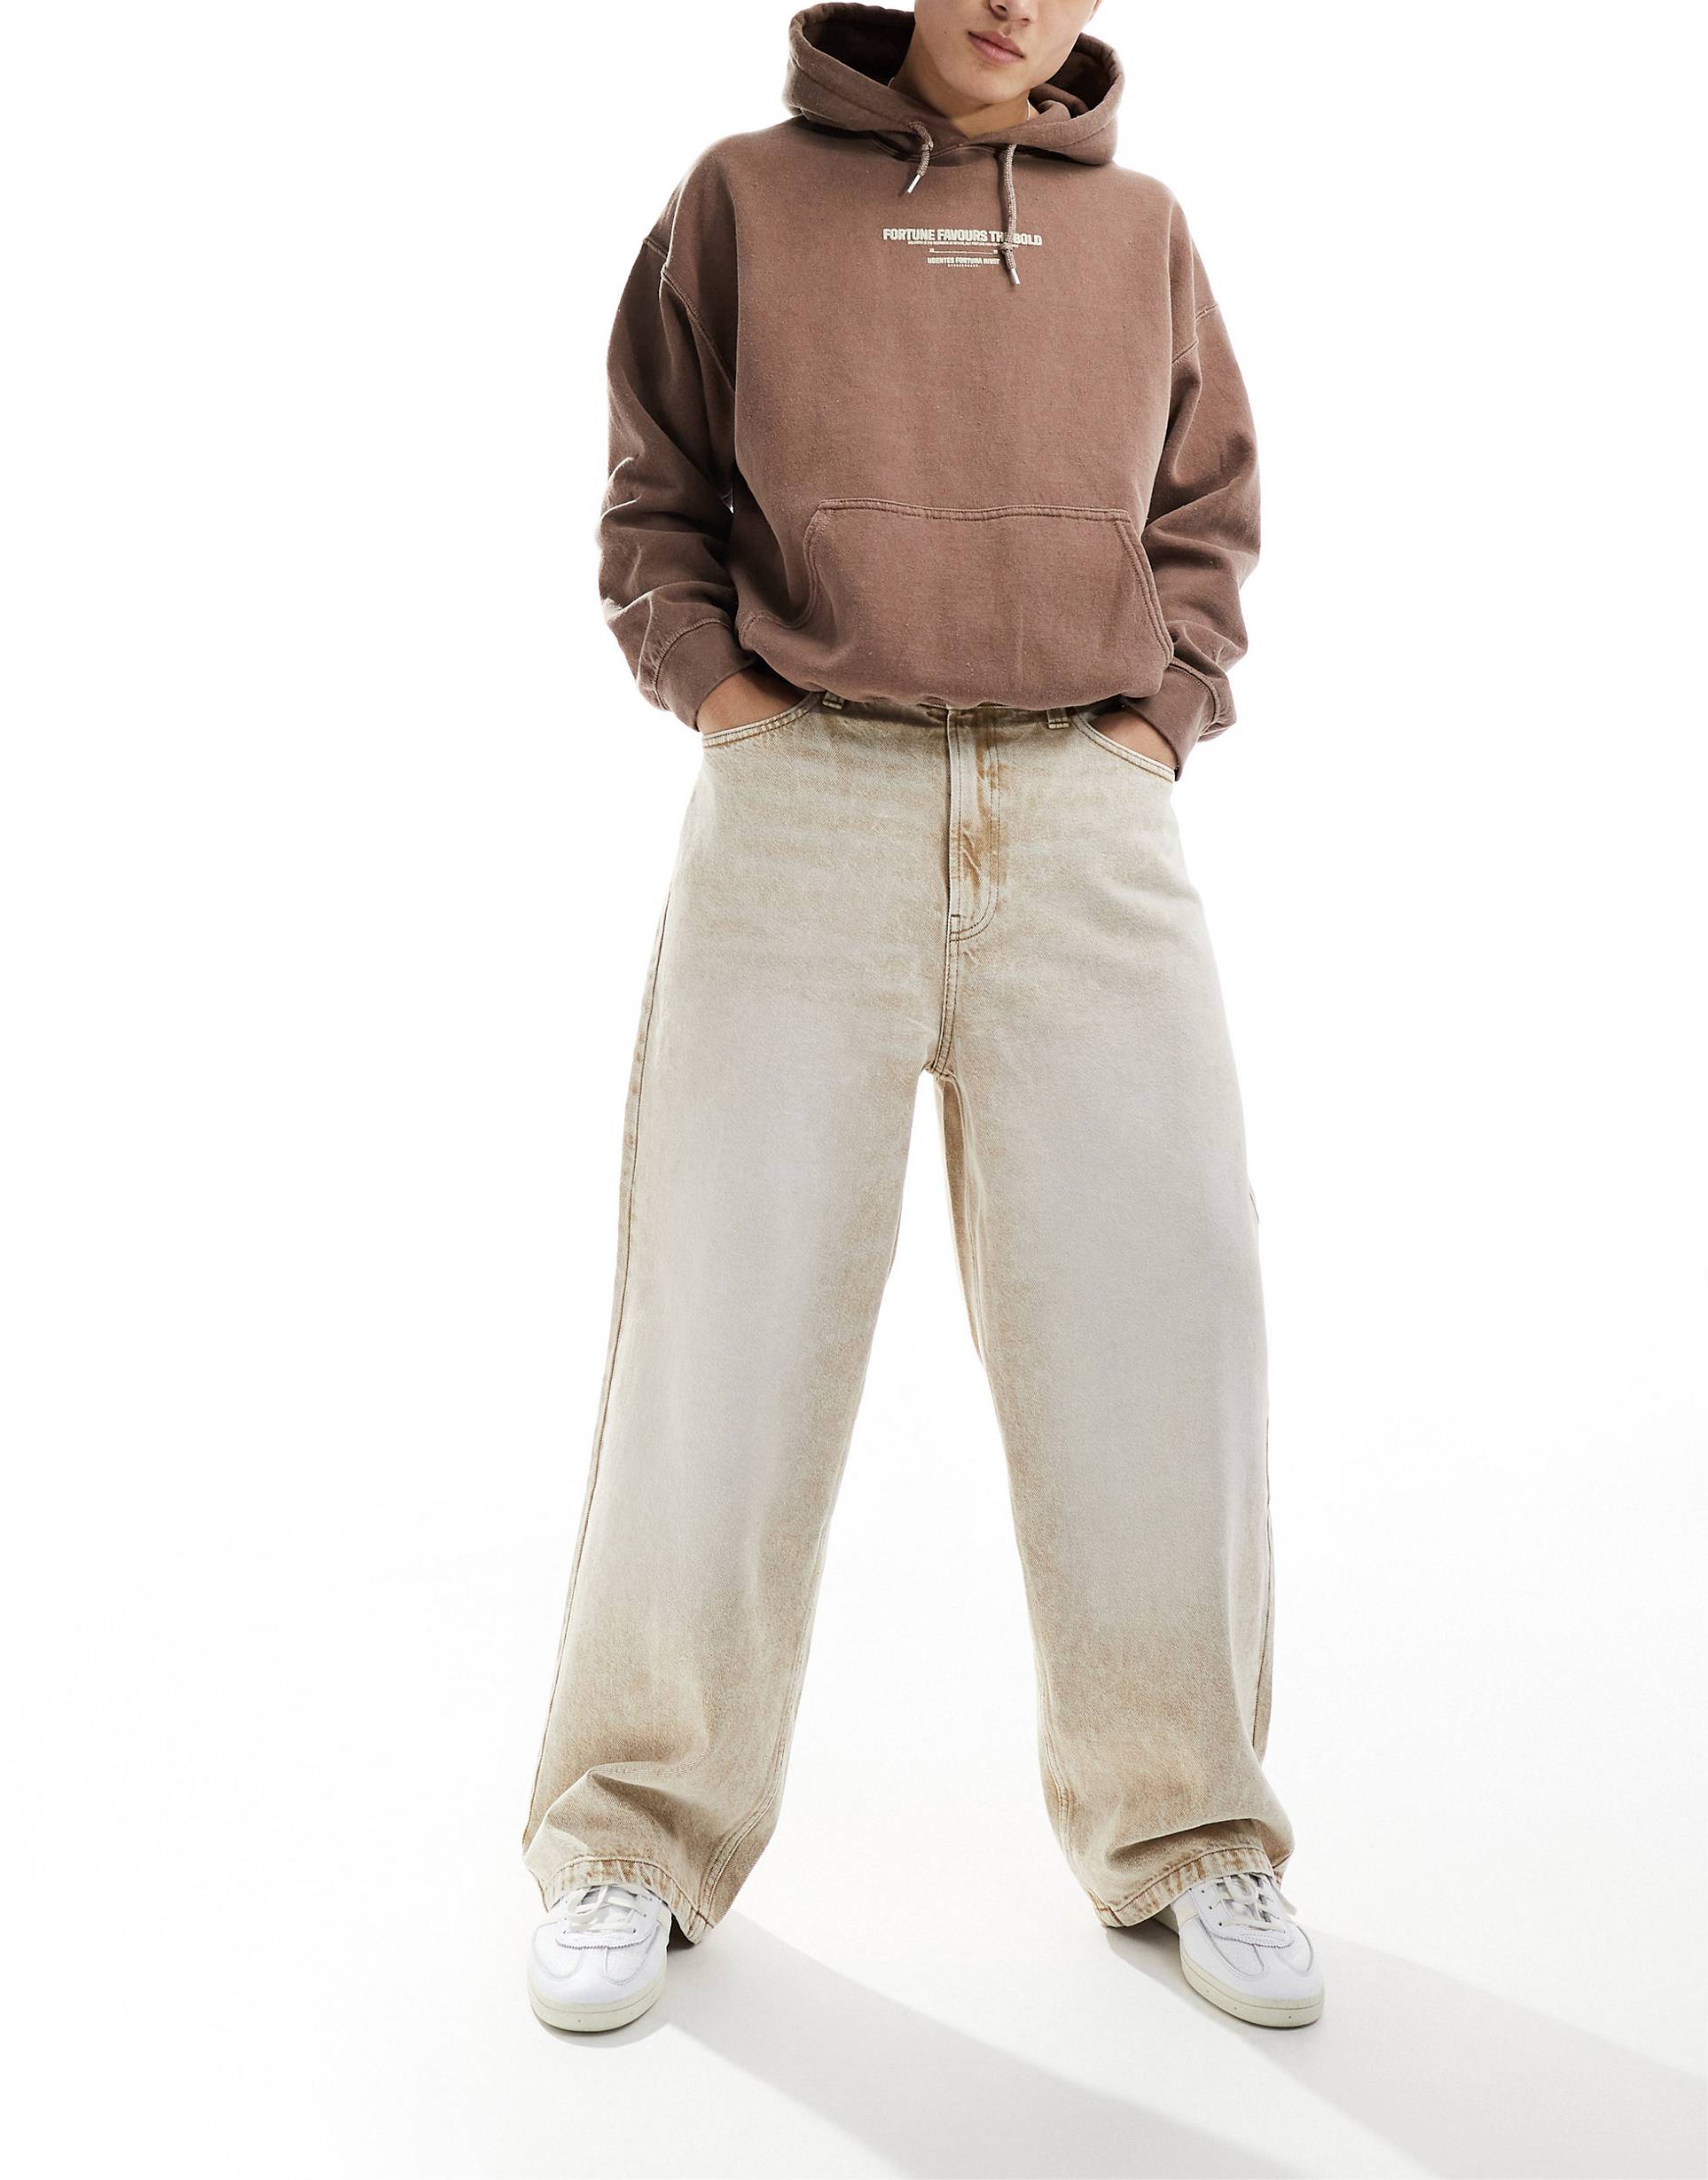 Джинсы Bershka Skater Fit Casted, бежевый джинсы bershka базовые 40 размер